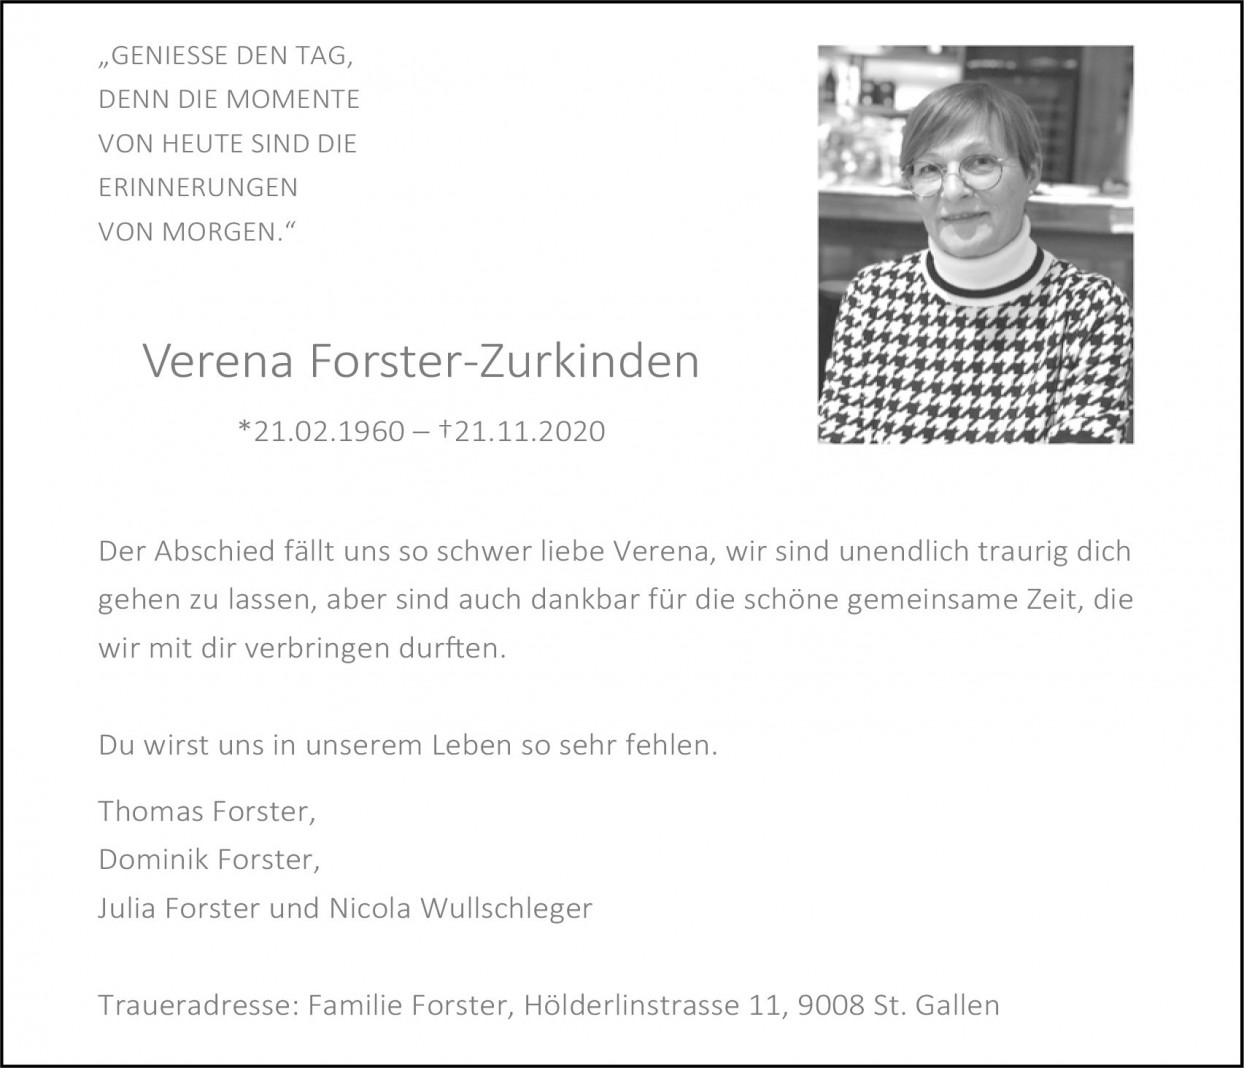 Verena Forster-Zurkinden